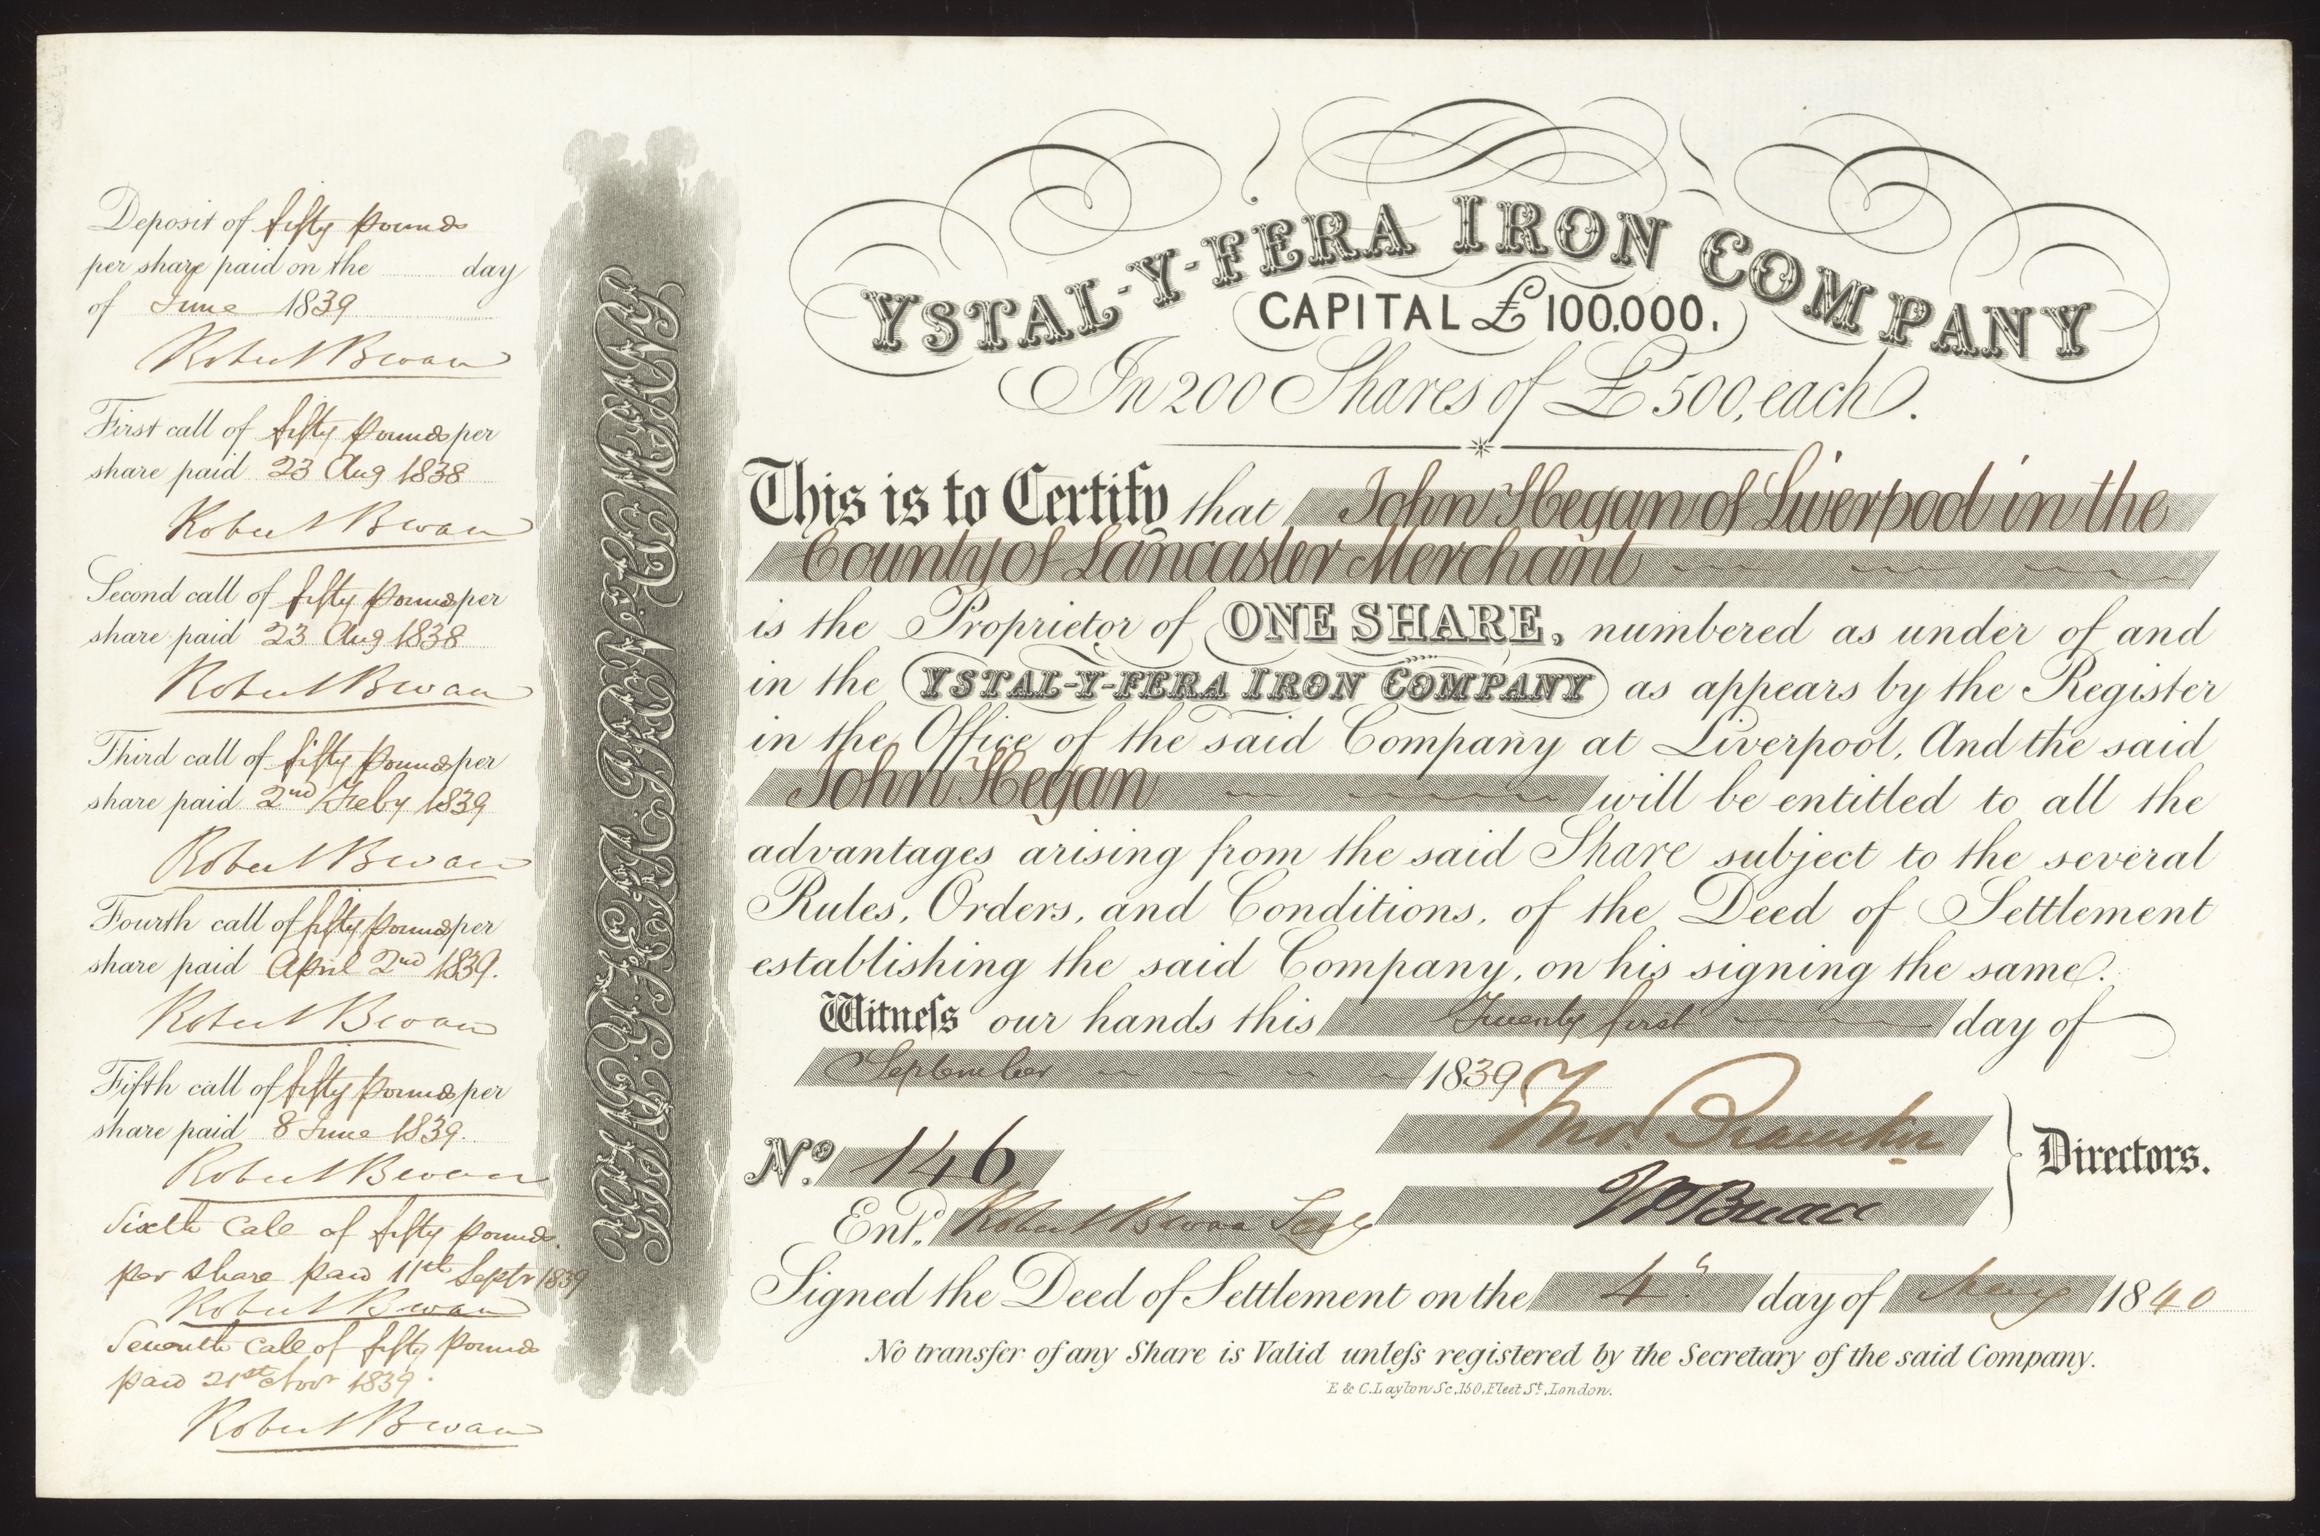 Ystal-Y-Fera Iron Company, share certificate